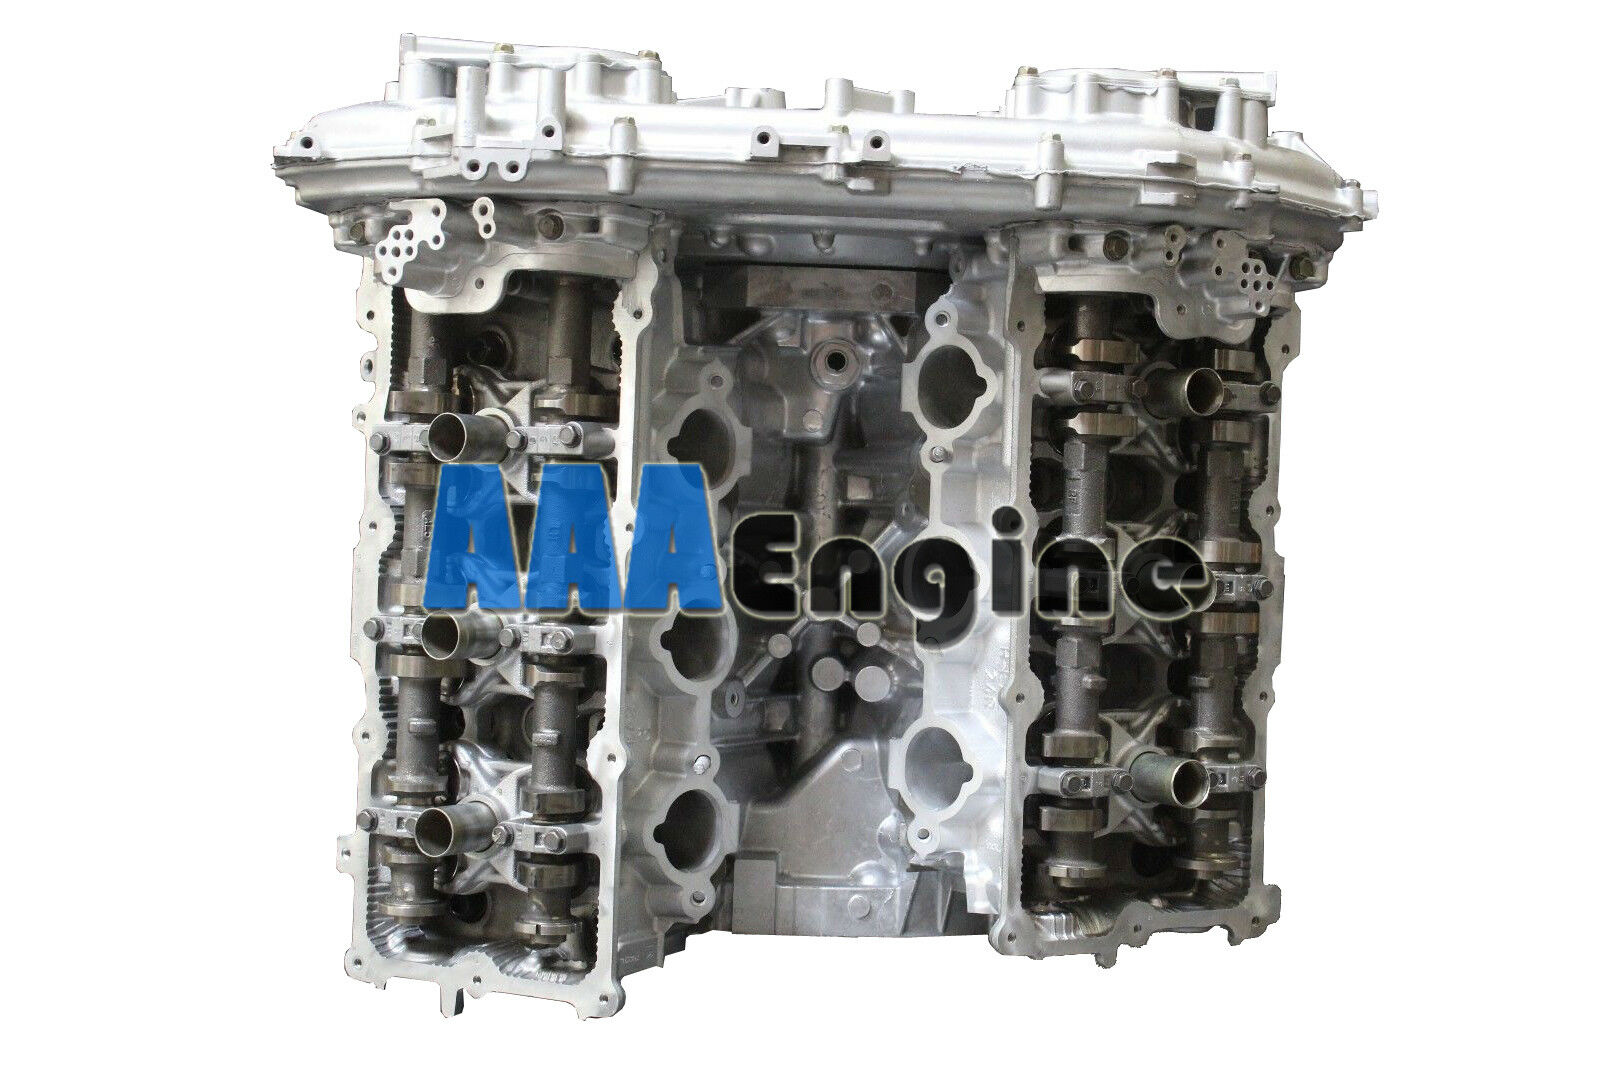 2005 pathfinder engine